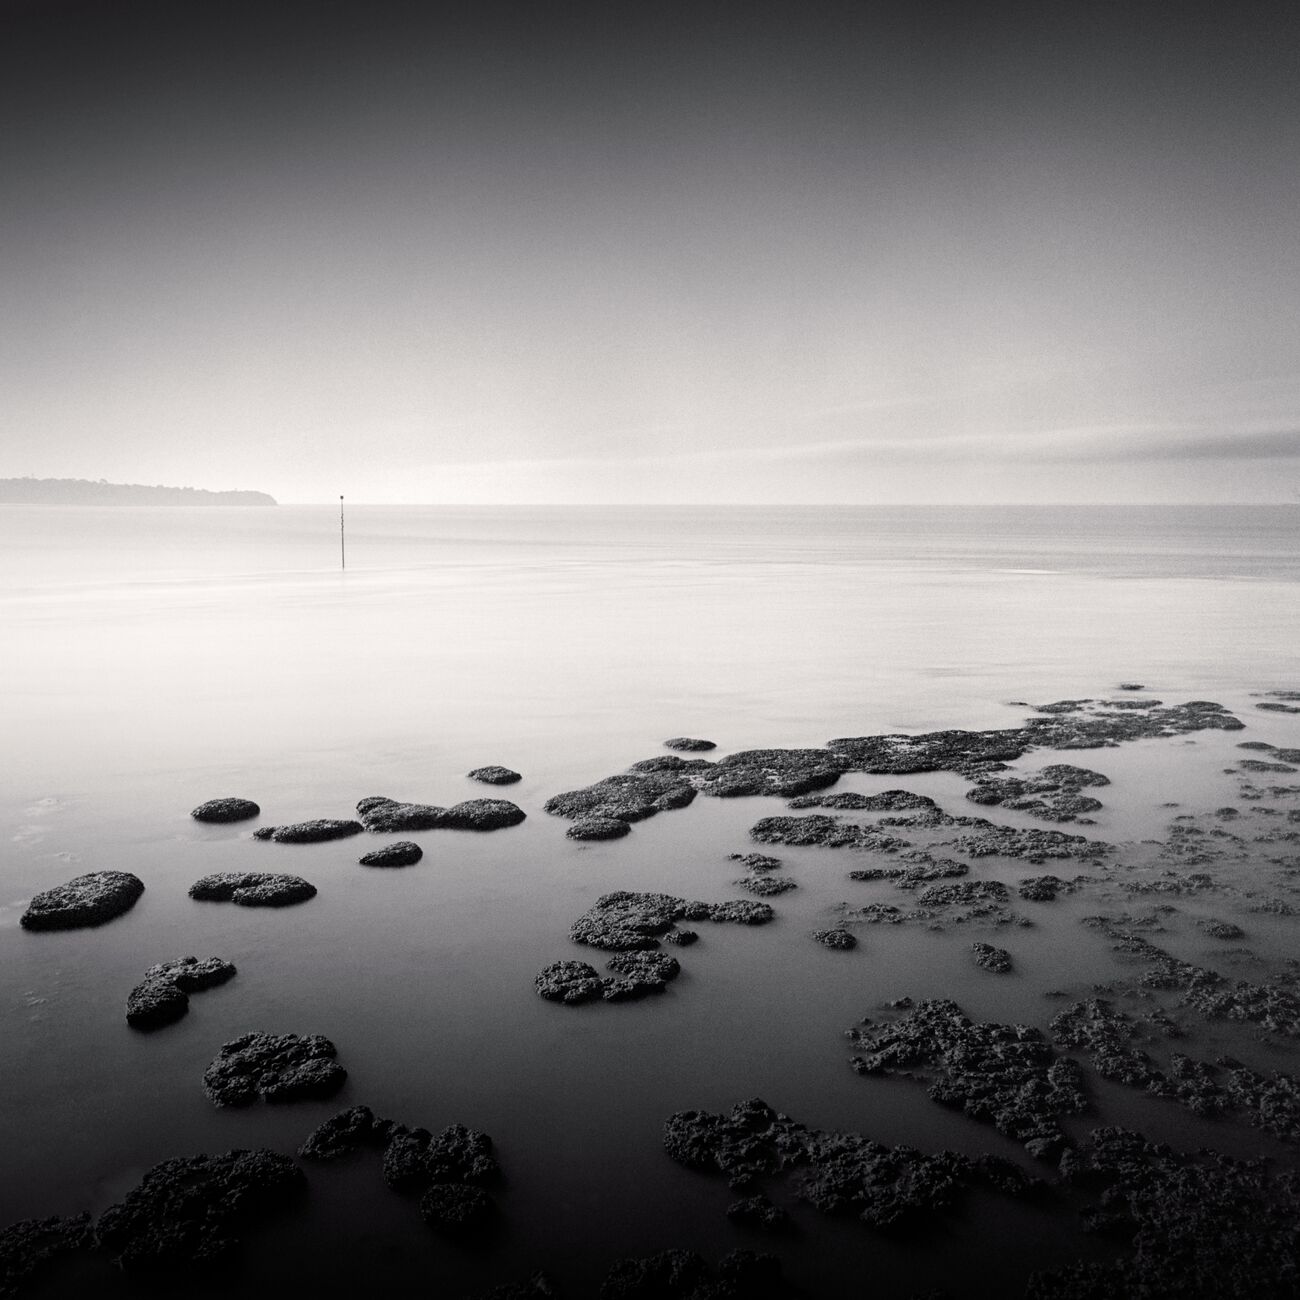 Low Tide Rocks, Saint-Georges-de-Didonne, France. Octobre 2020. Ref-1424 - Denis Olivier Photographie